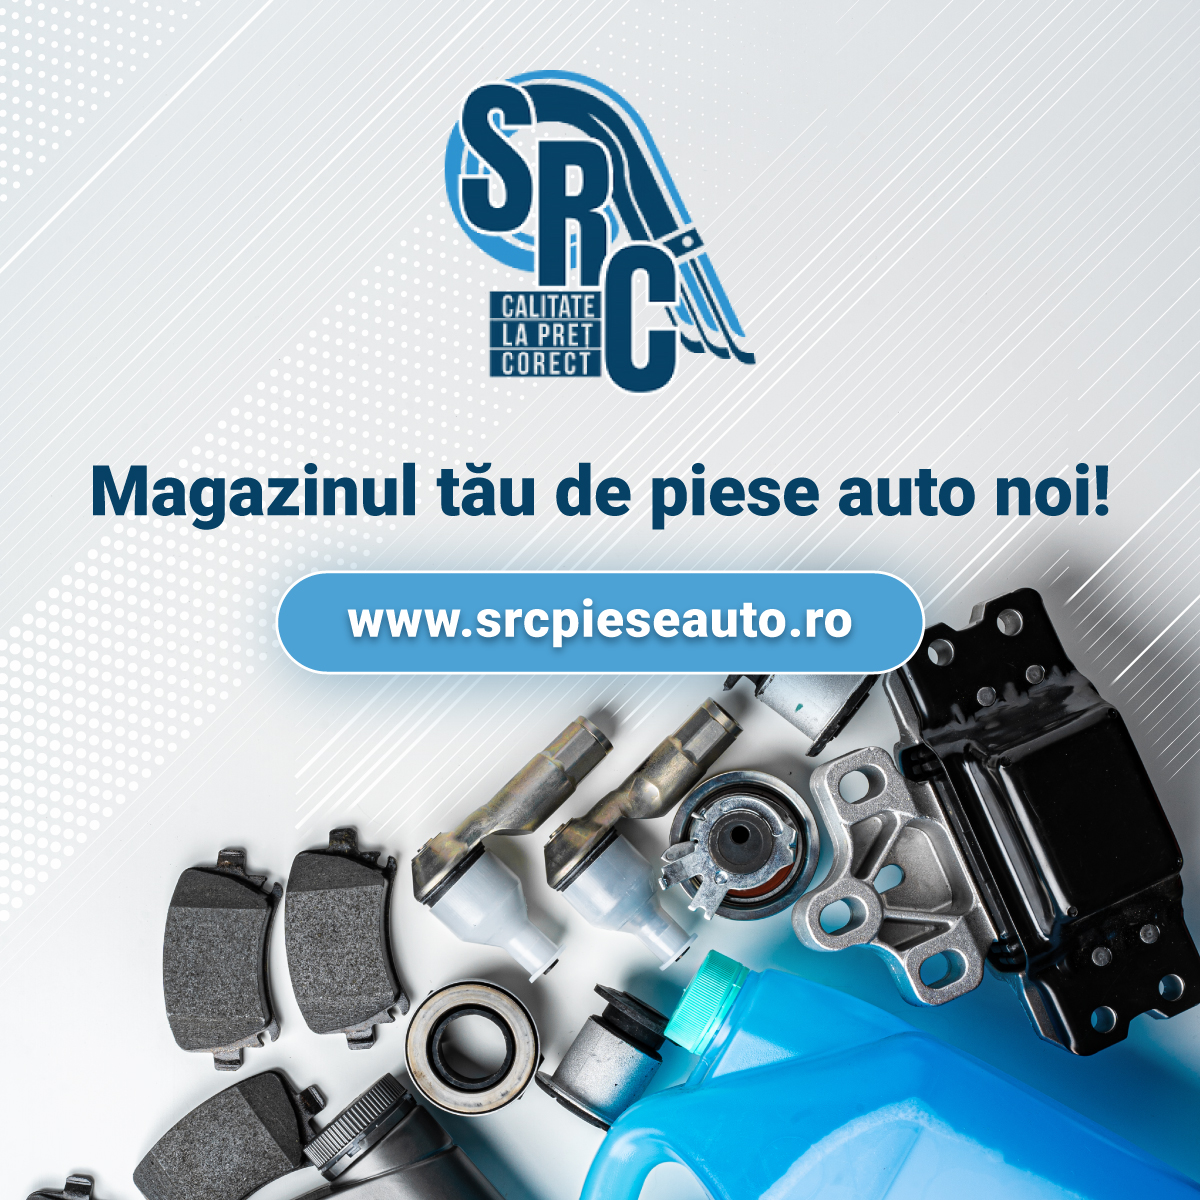 SRC Piese Auto, magazin online de piese auto originale si ...